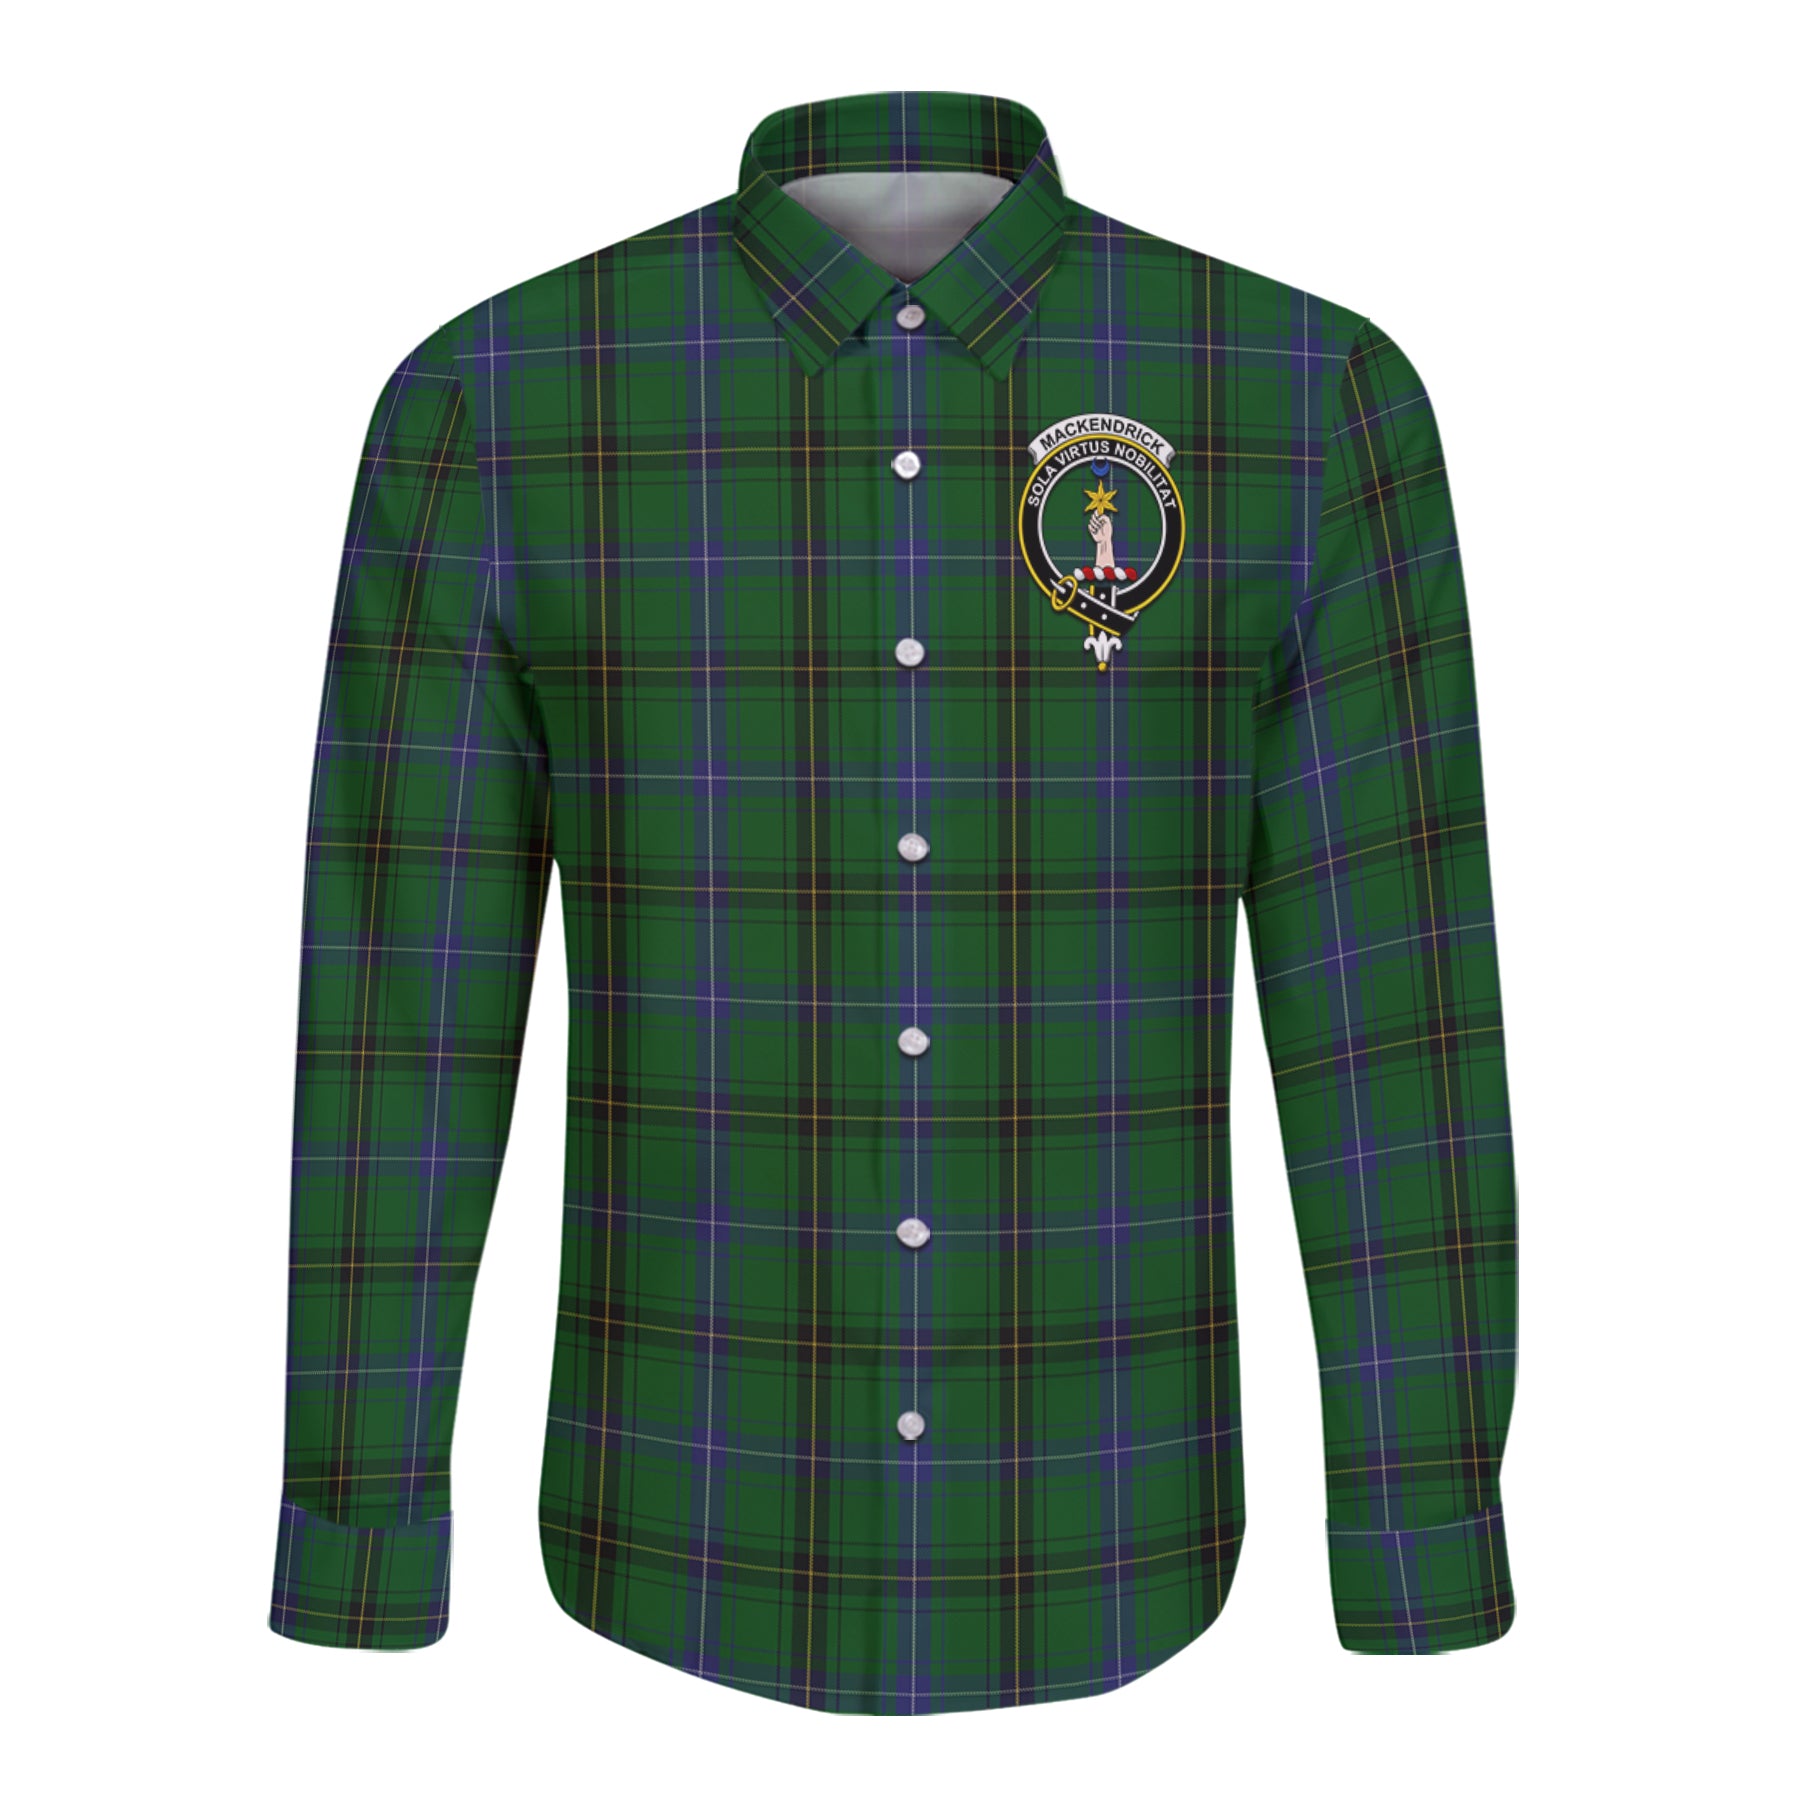 Mackendrick Tartan Long Sleeve Button Up Shirt with Scottish Family Crest K23